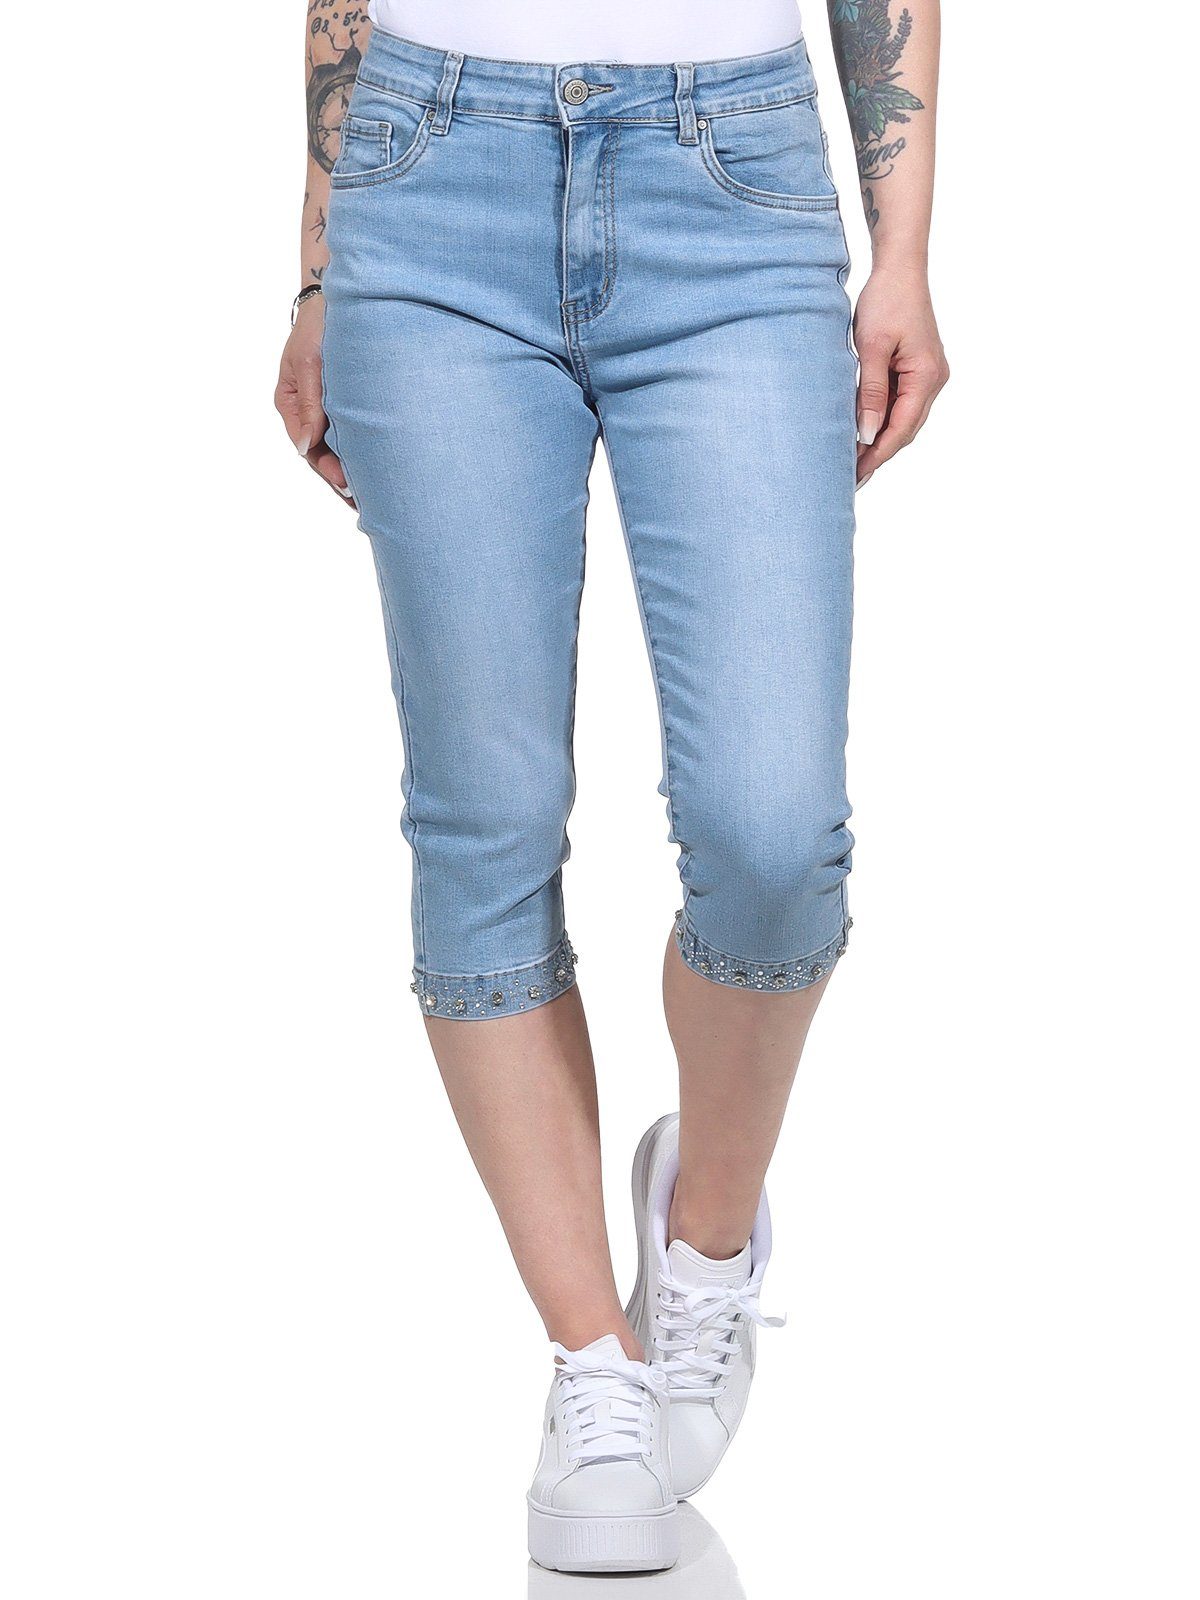 Aurela Damenmode Jeansbermudas Damen Jeans Bermuda kurze Jeanshosen Sommer Caprihosen mit Stretchanteil, 5-Pocket-Style | Jeansshorts